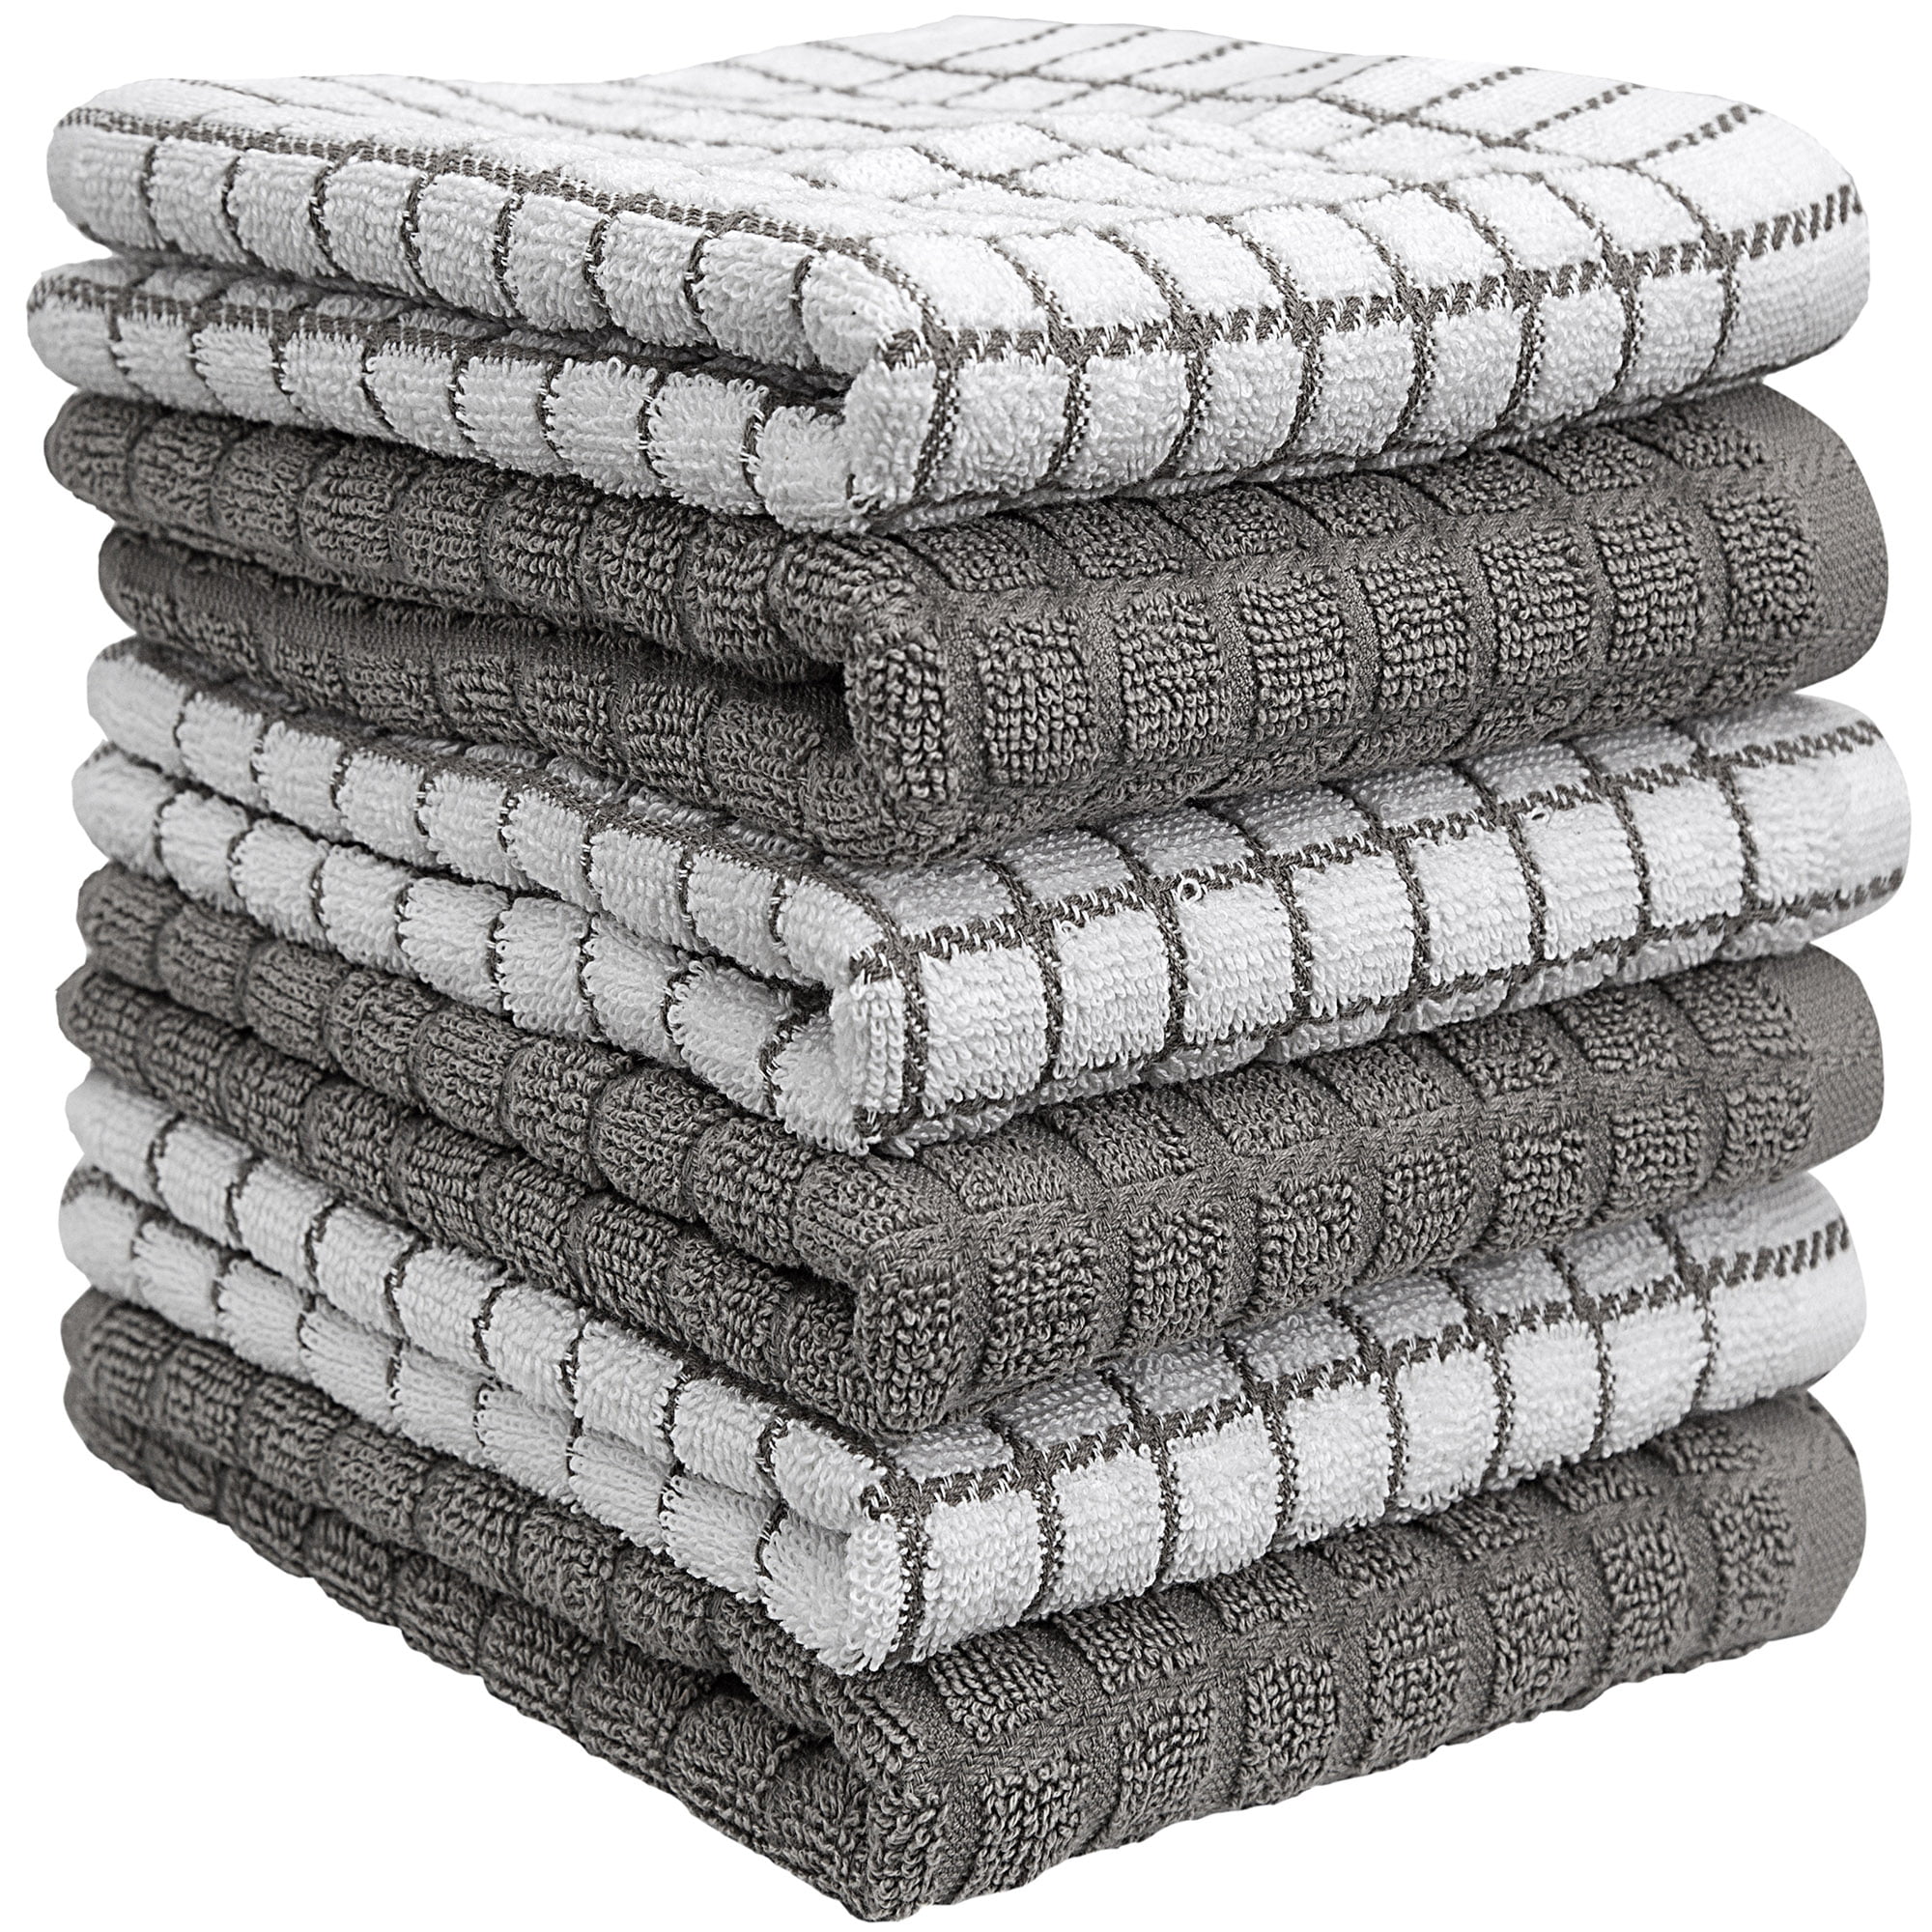 Kitchen Towels 16”x 26”- 6 Pack | Large Cotton Kitchen Hand Towels | Dish  Towels | Popcorn Stripe Design | 400 GSM Highly Absorbent Tea Towels Set